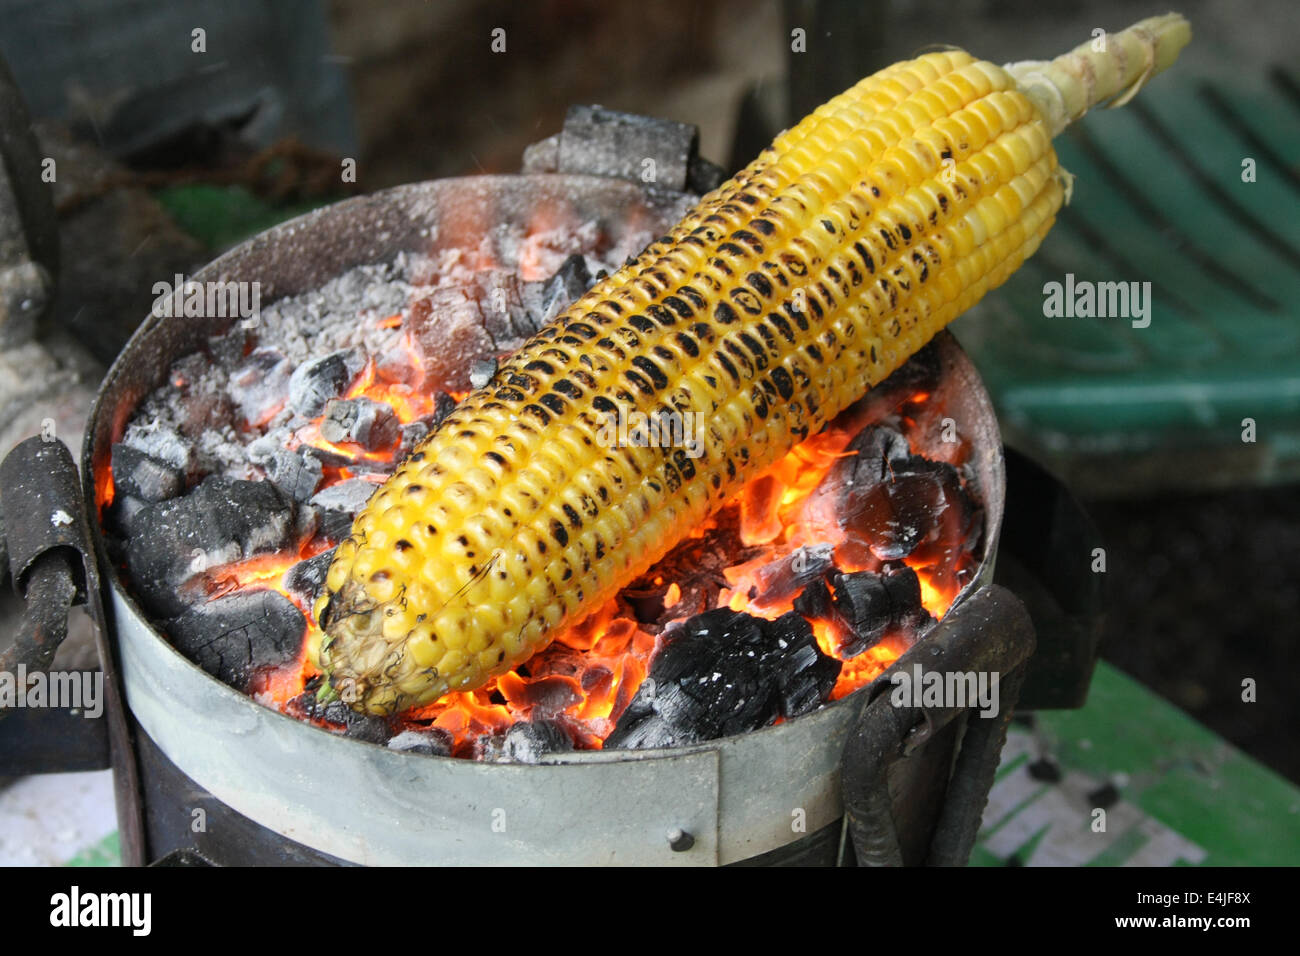 corn-on-charcoal-grill-E4JF8X.jpg